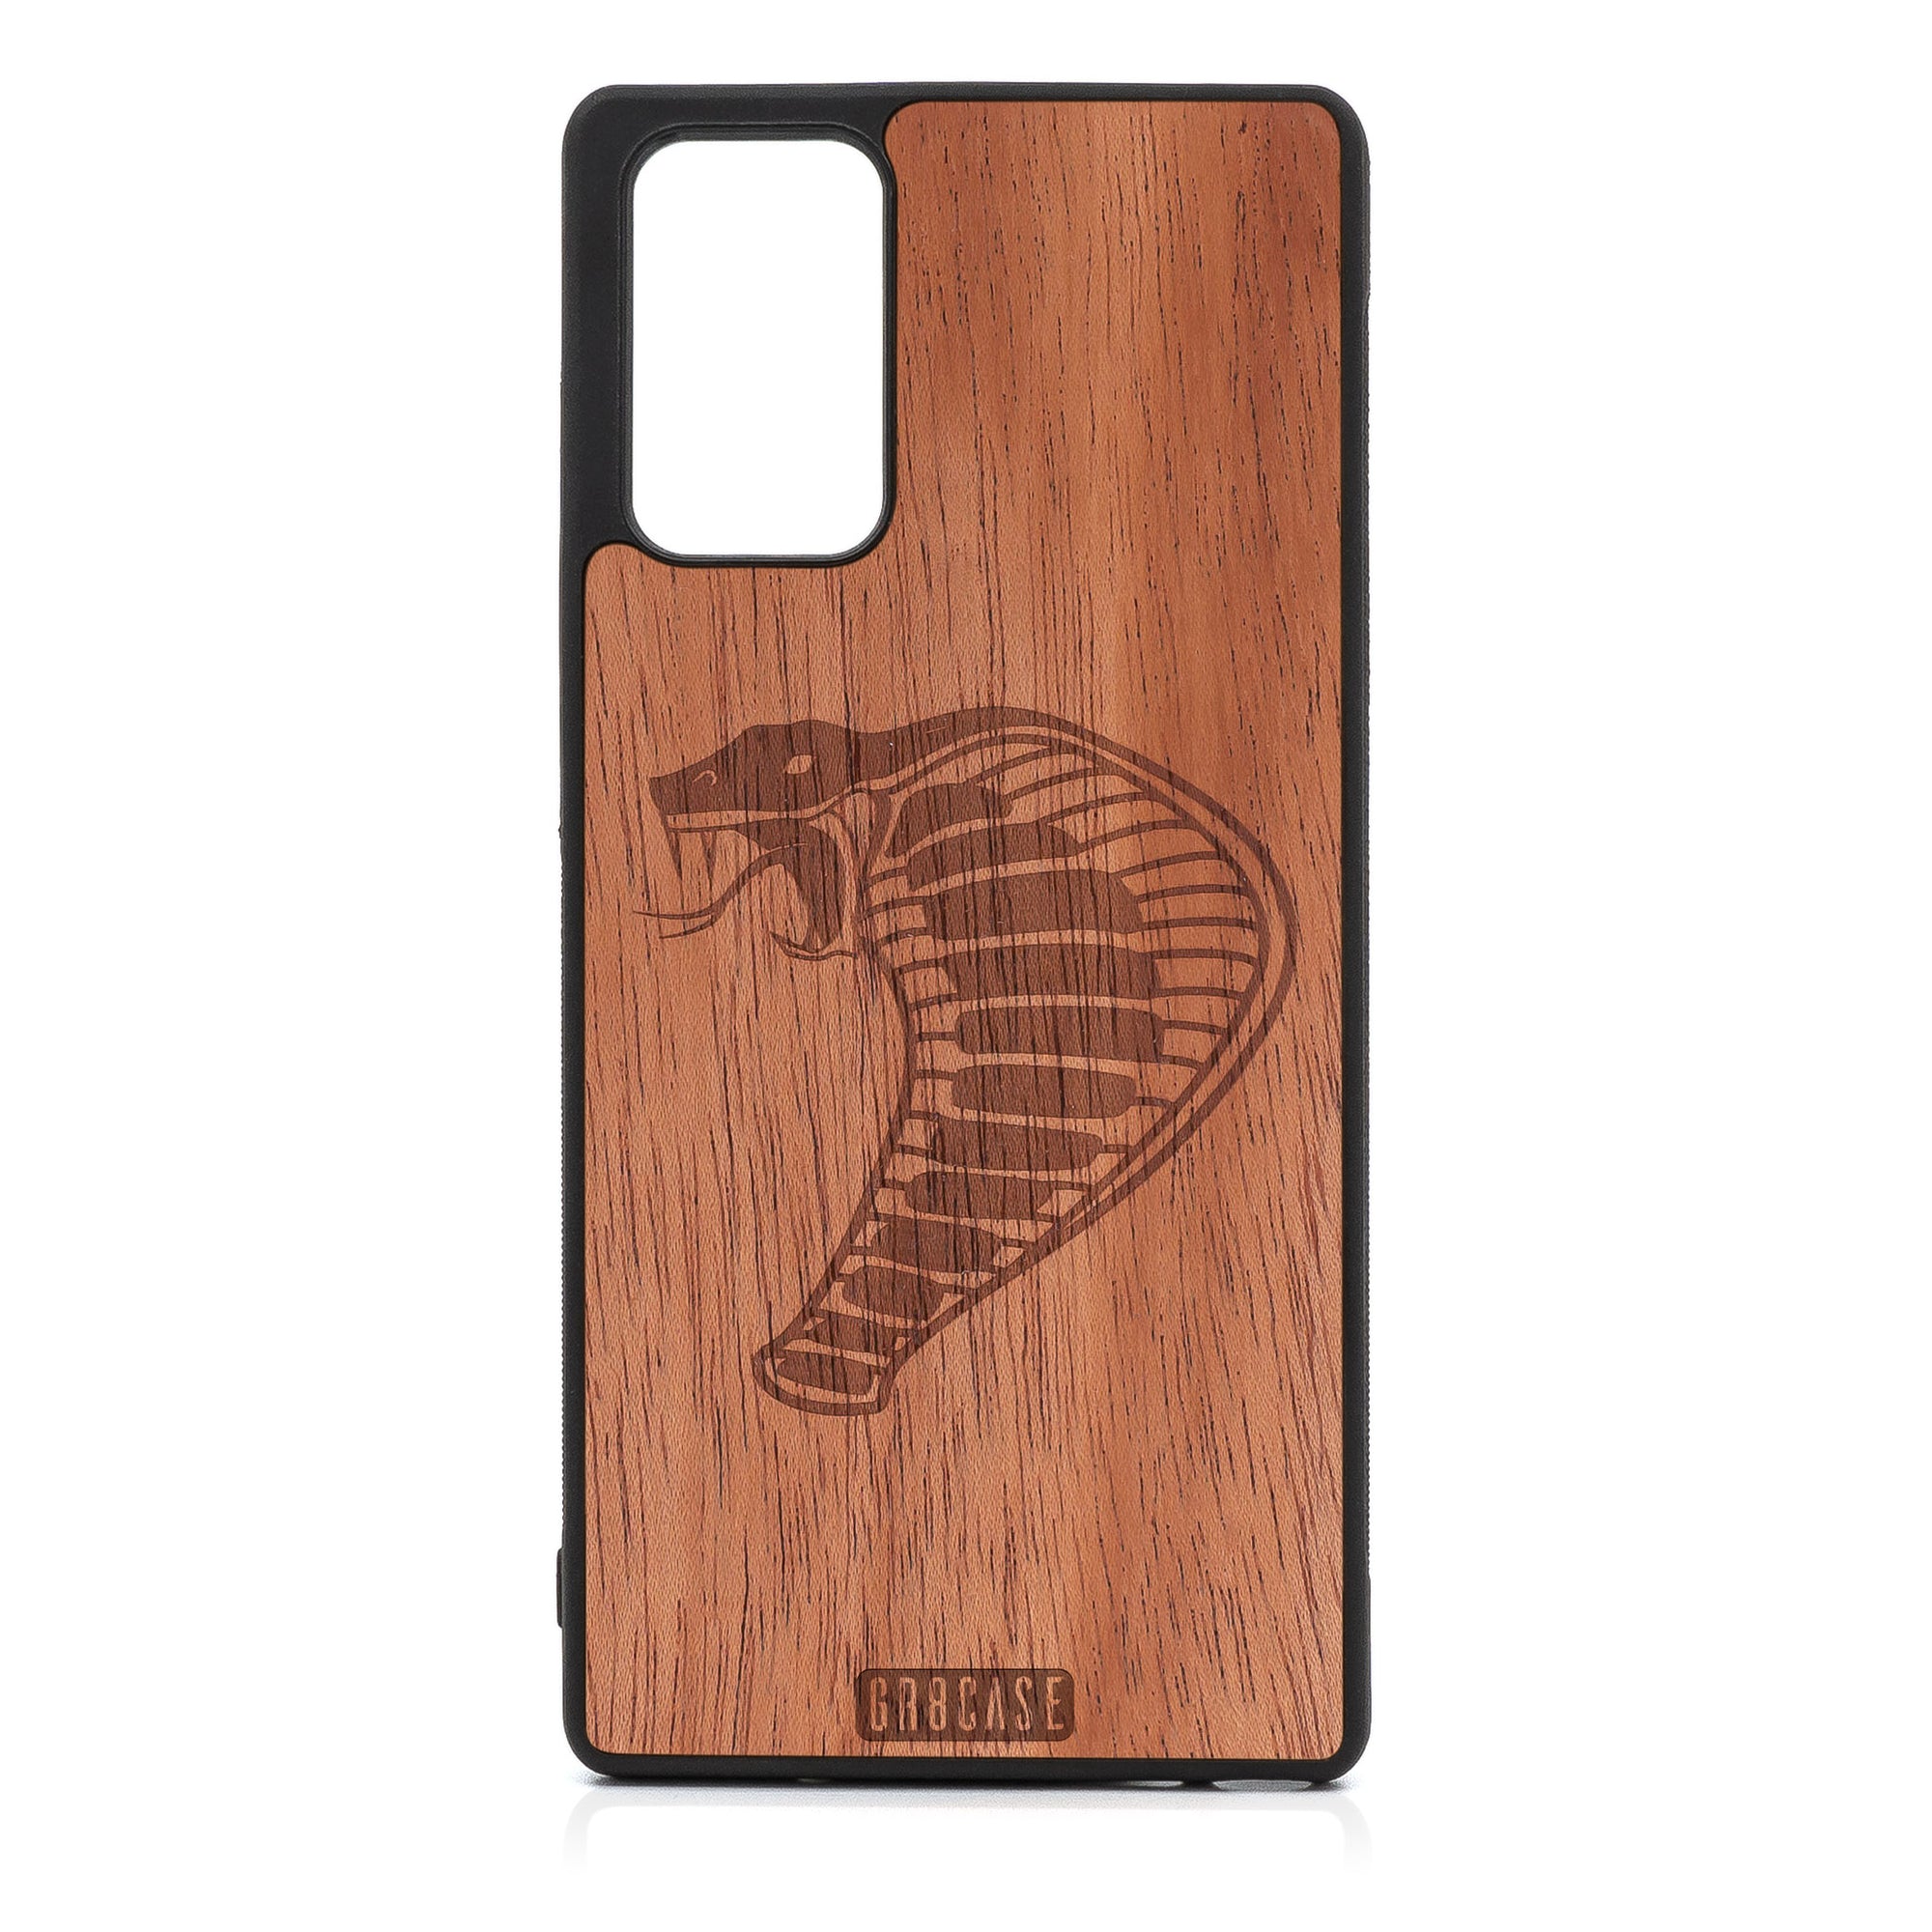 Cobra Design Wood Case For Samsung Galaxy Note 20